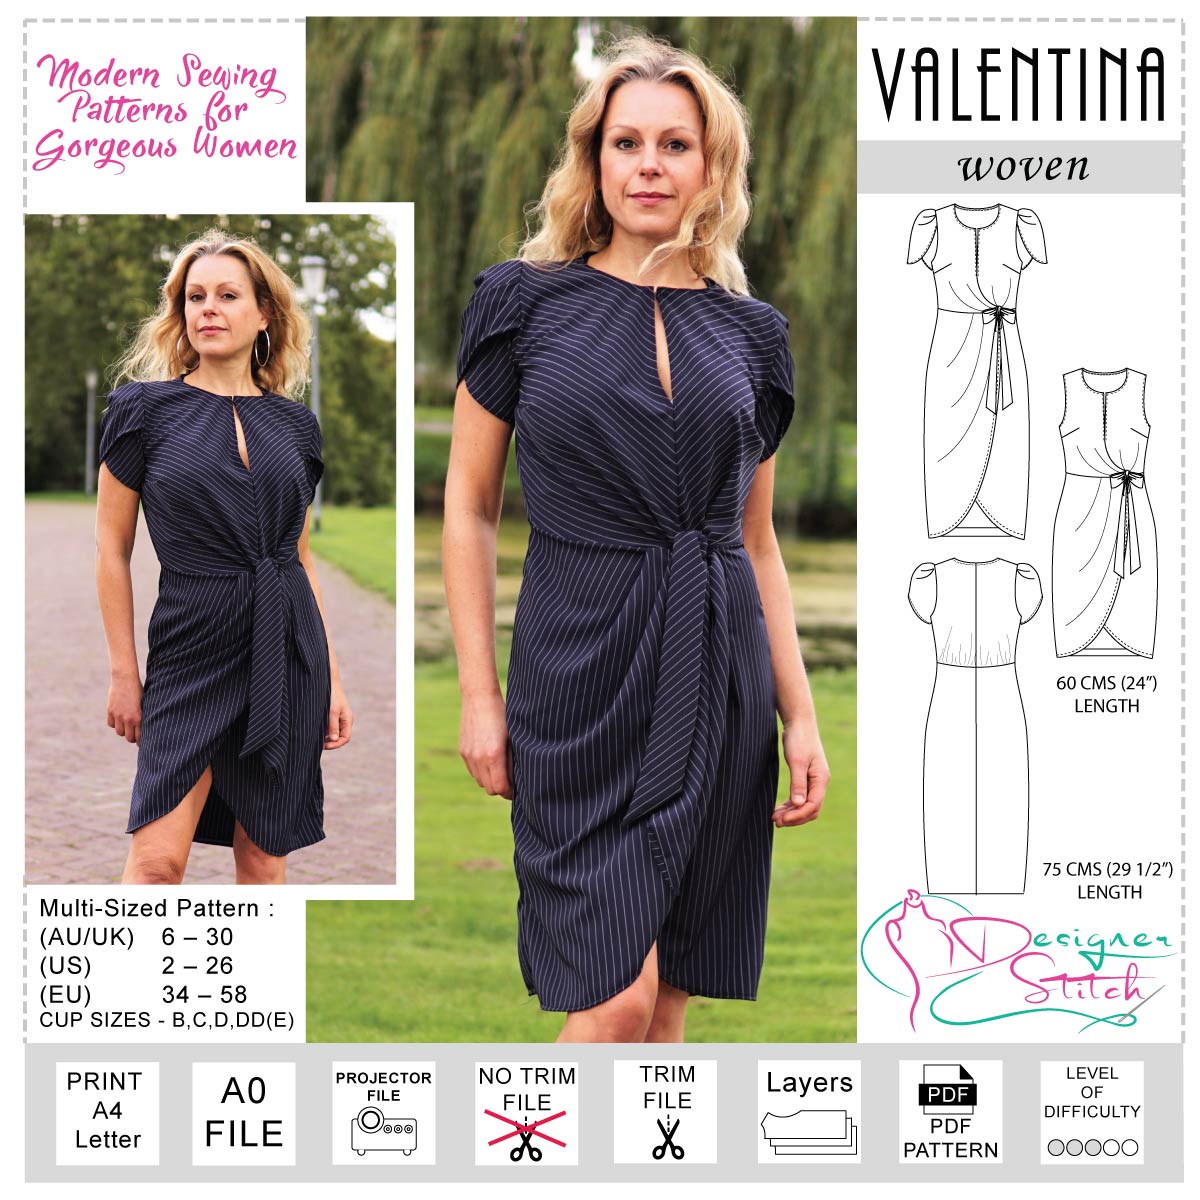 Valentina Dress Sewing Pattern (PDF) - Designer Stitch